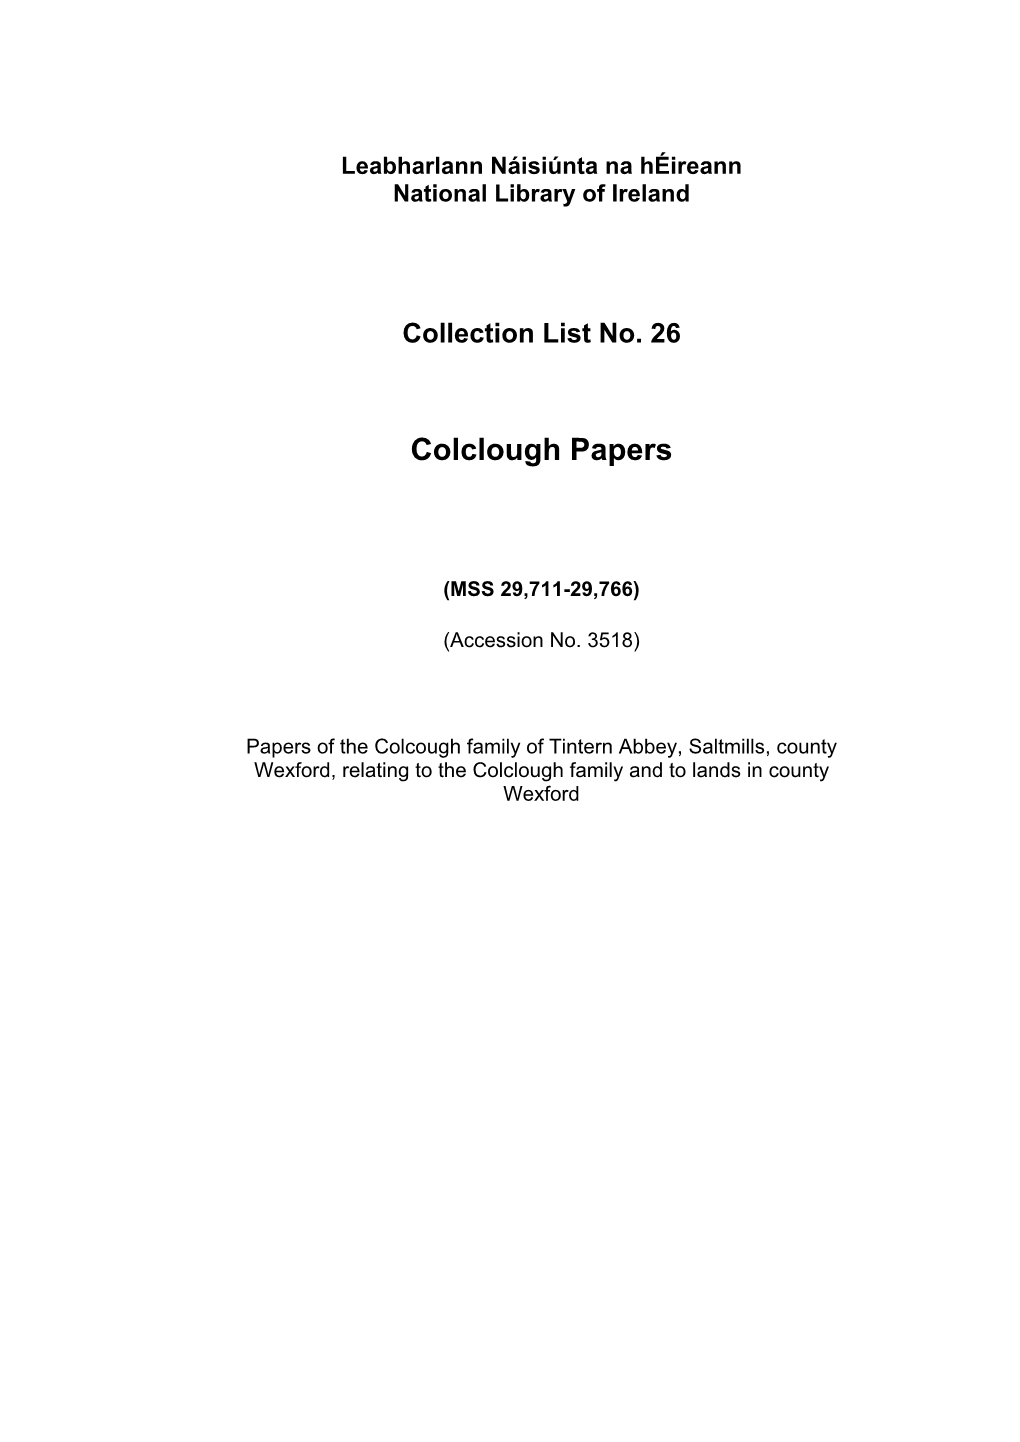 Colclough Papers